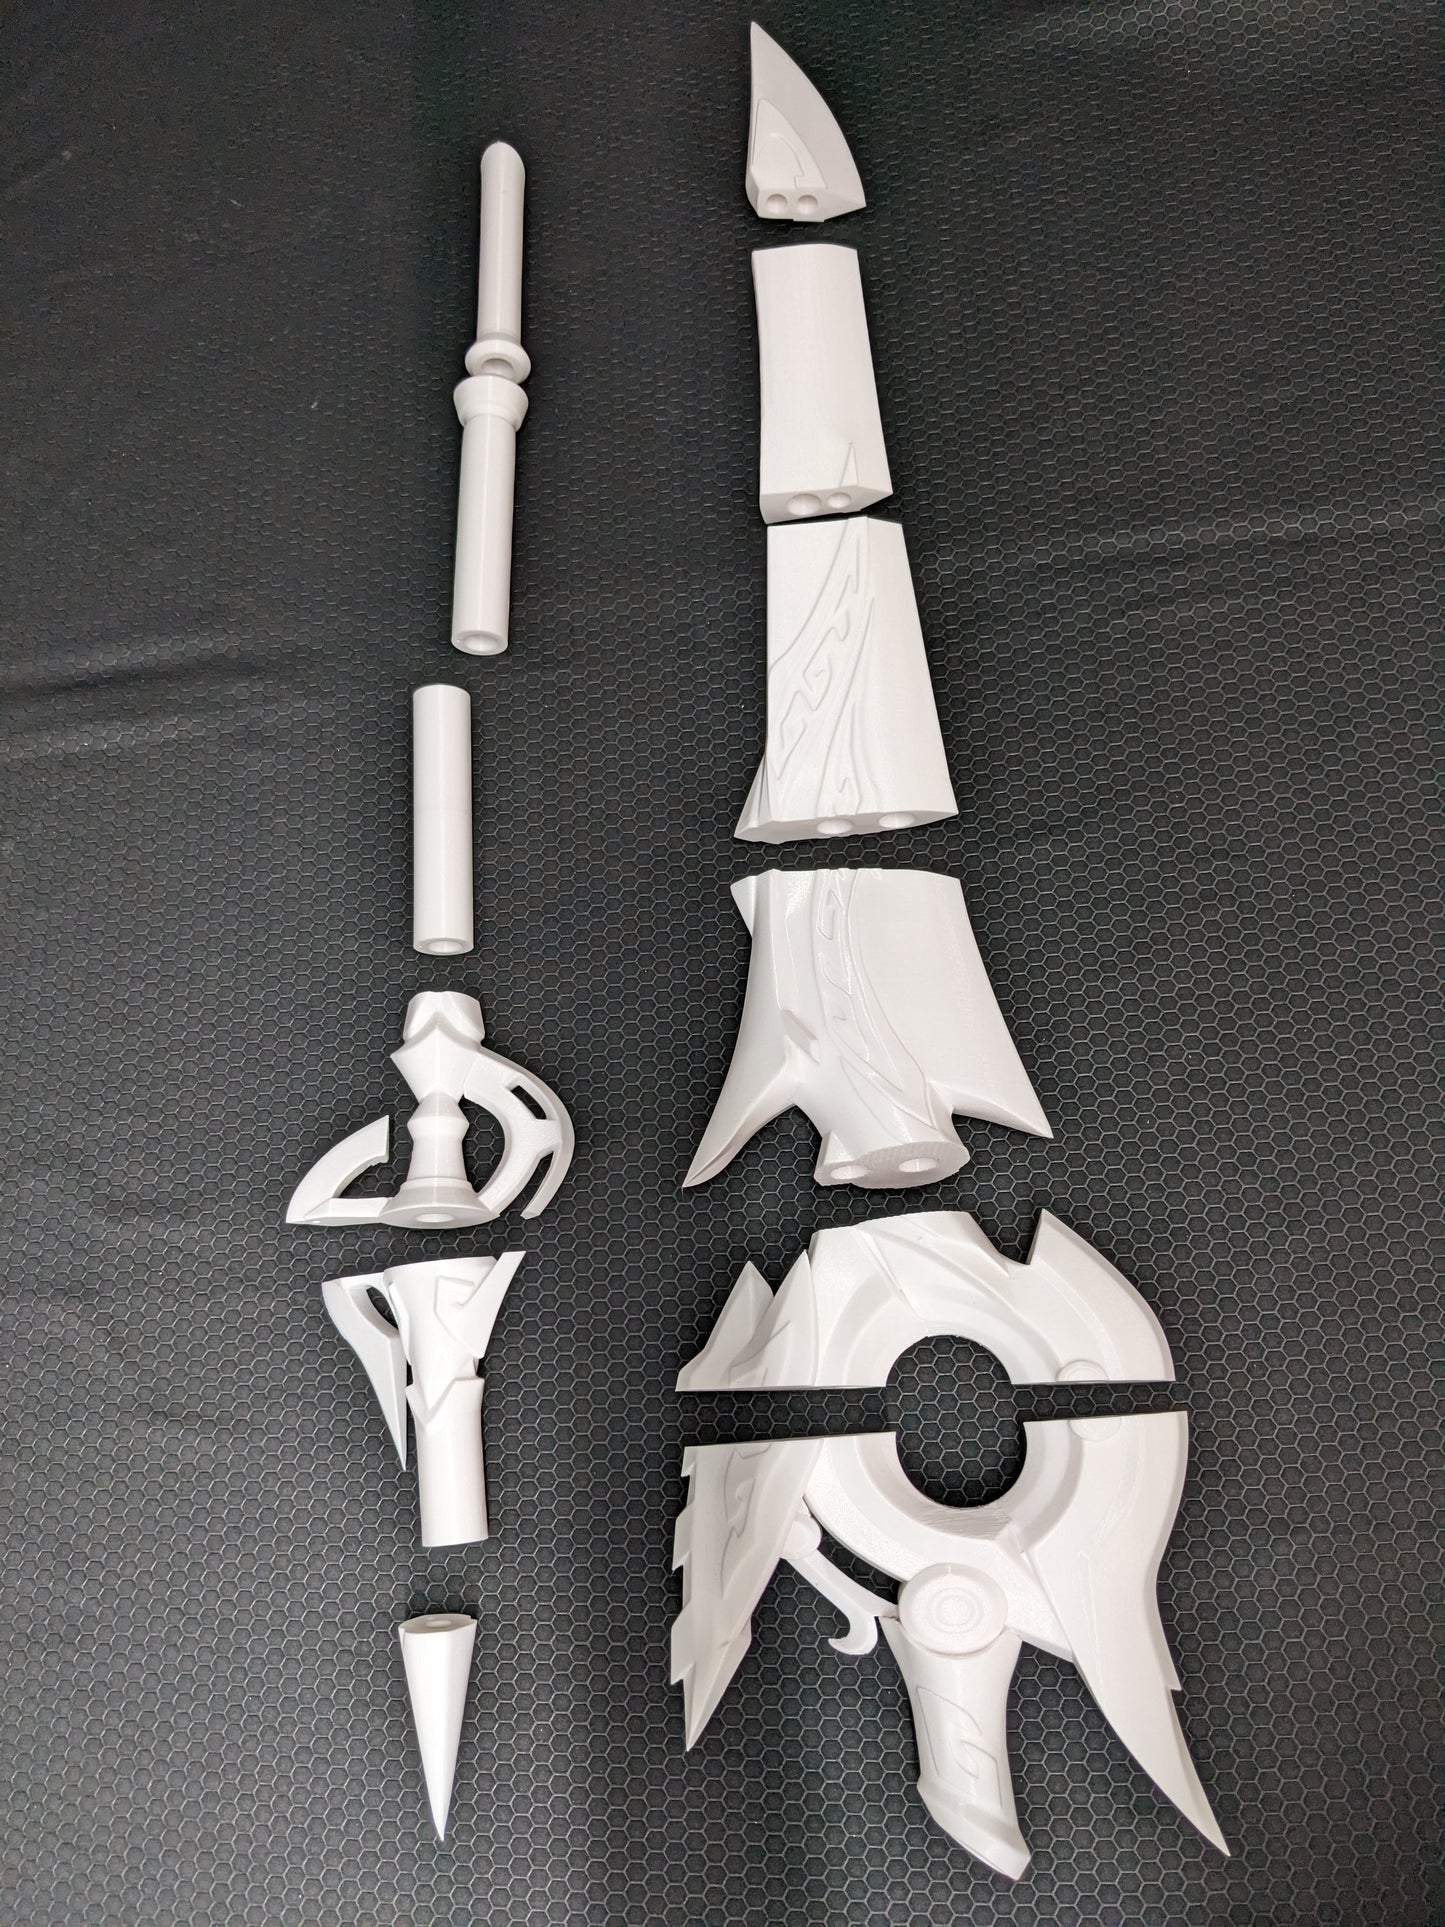 Jing Yuan Spear - Digital 3D Model Files and Physical 3D Printed Kit Options - Honkai: Star Rail Cosplay - Jing Yuan Cosplay